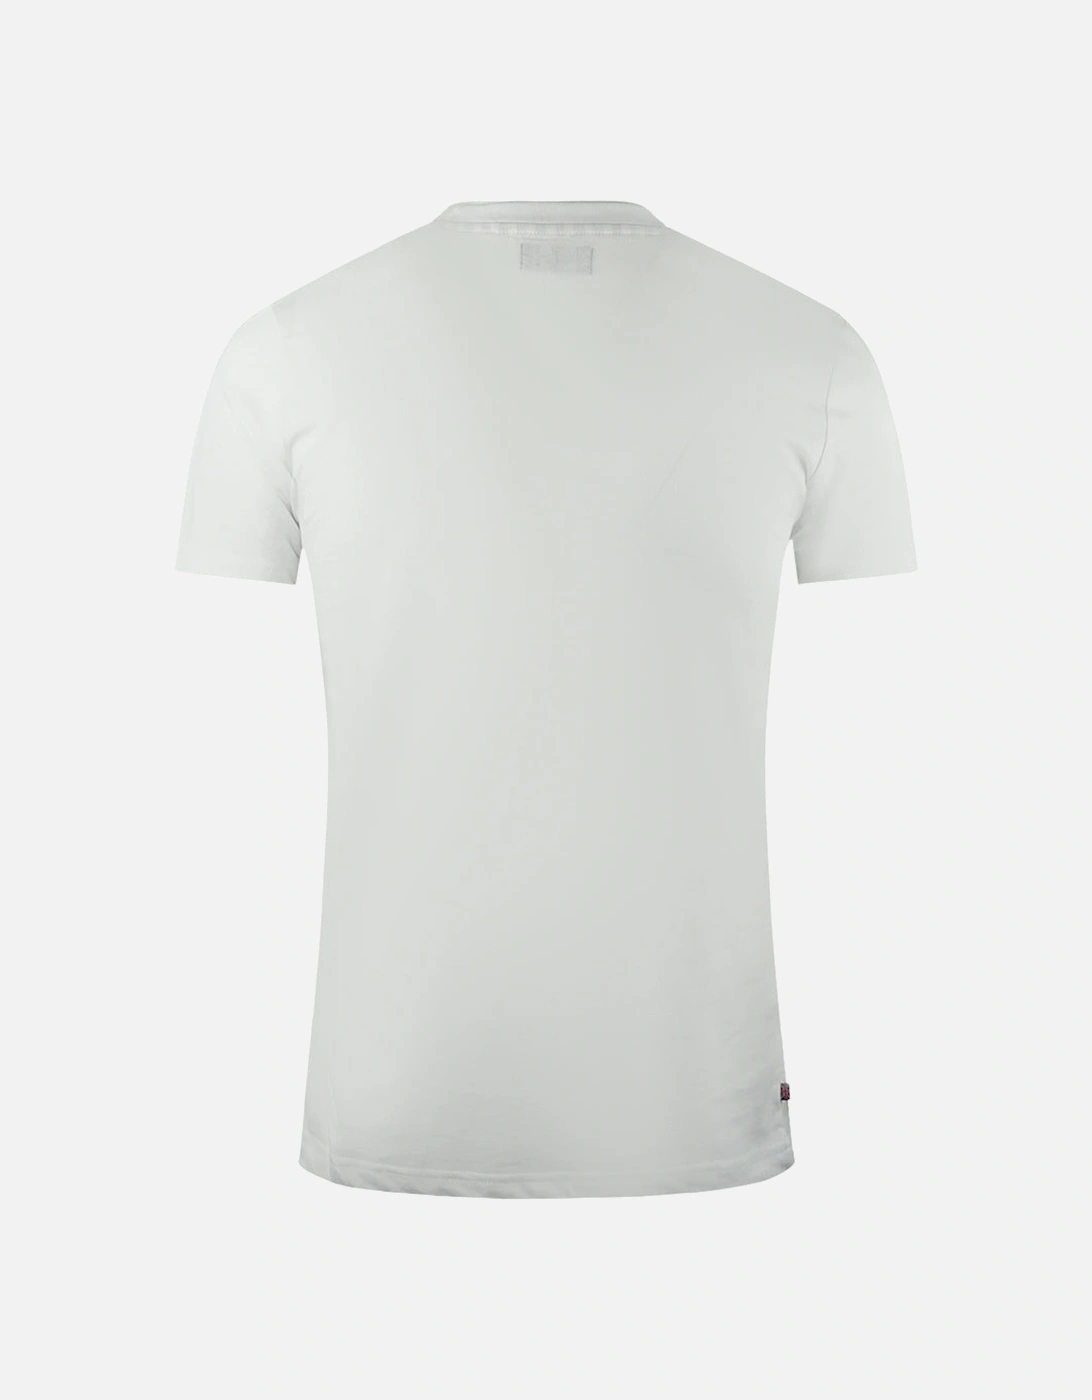 London Aldis Brand Logo On Chest White T-Shirt